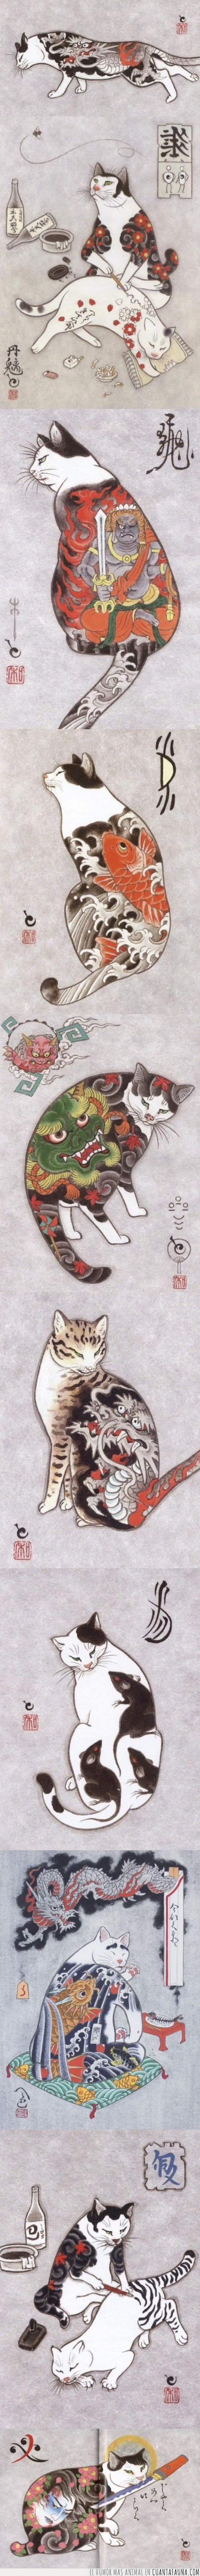 gato,japon